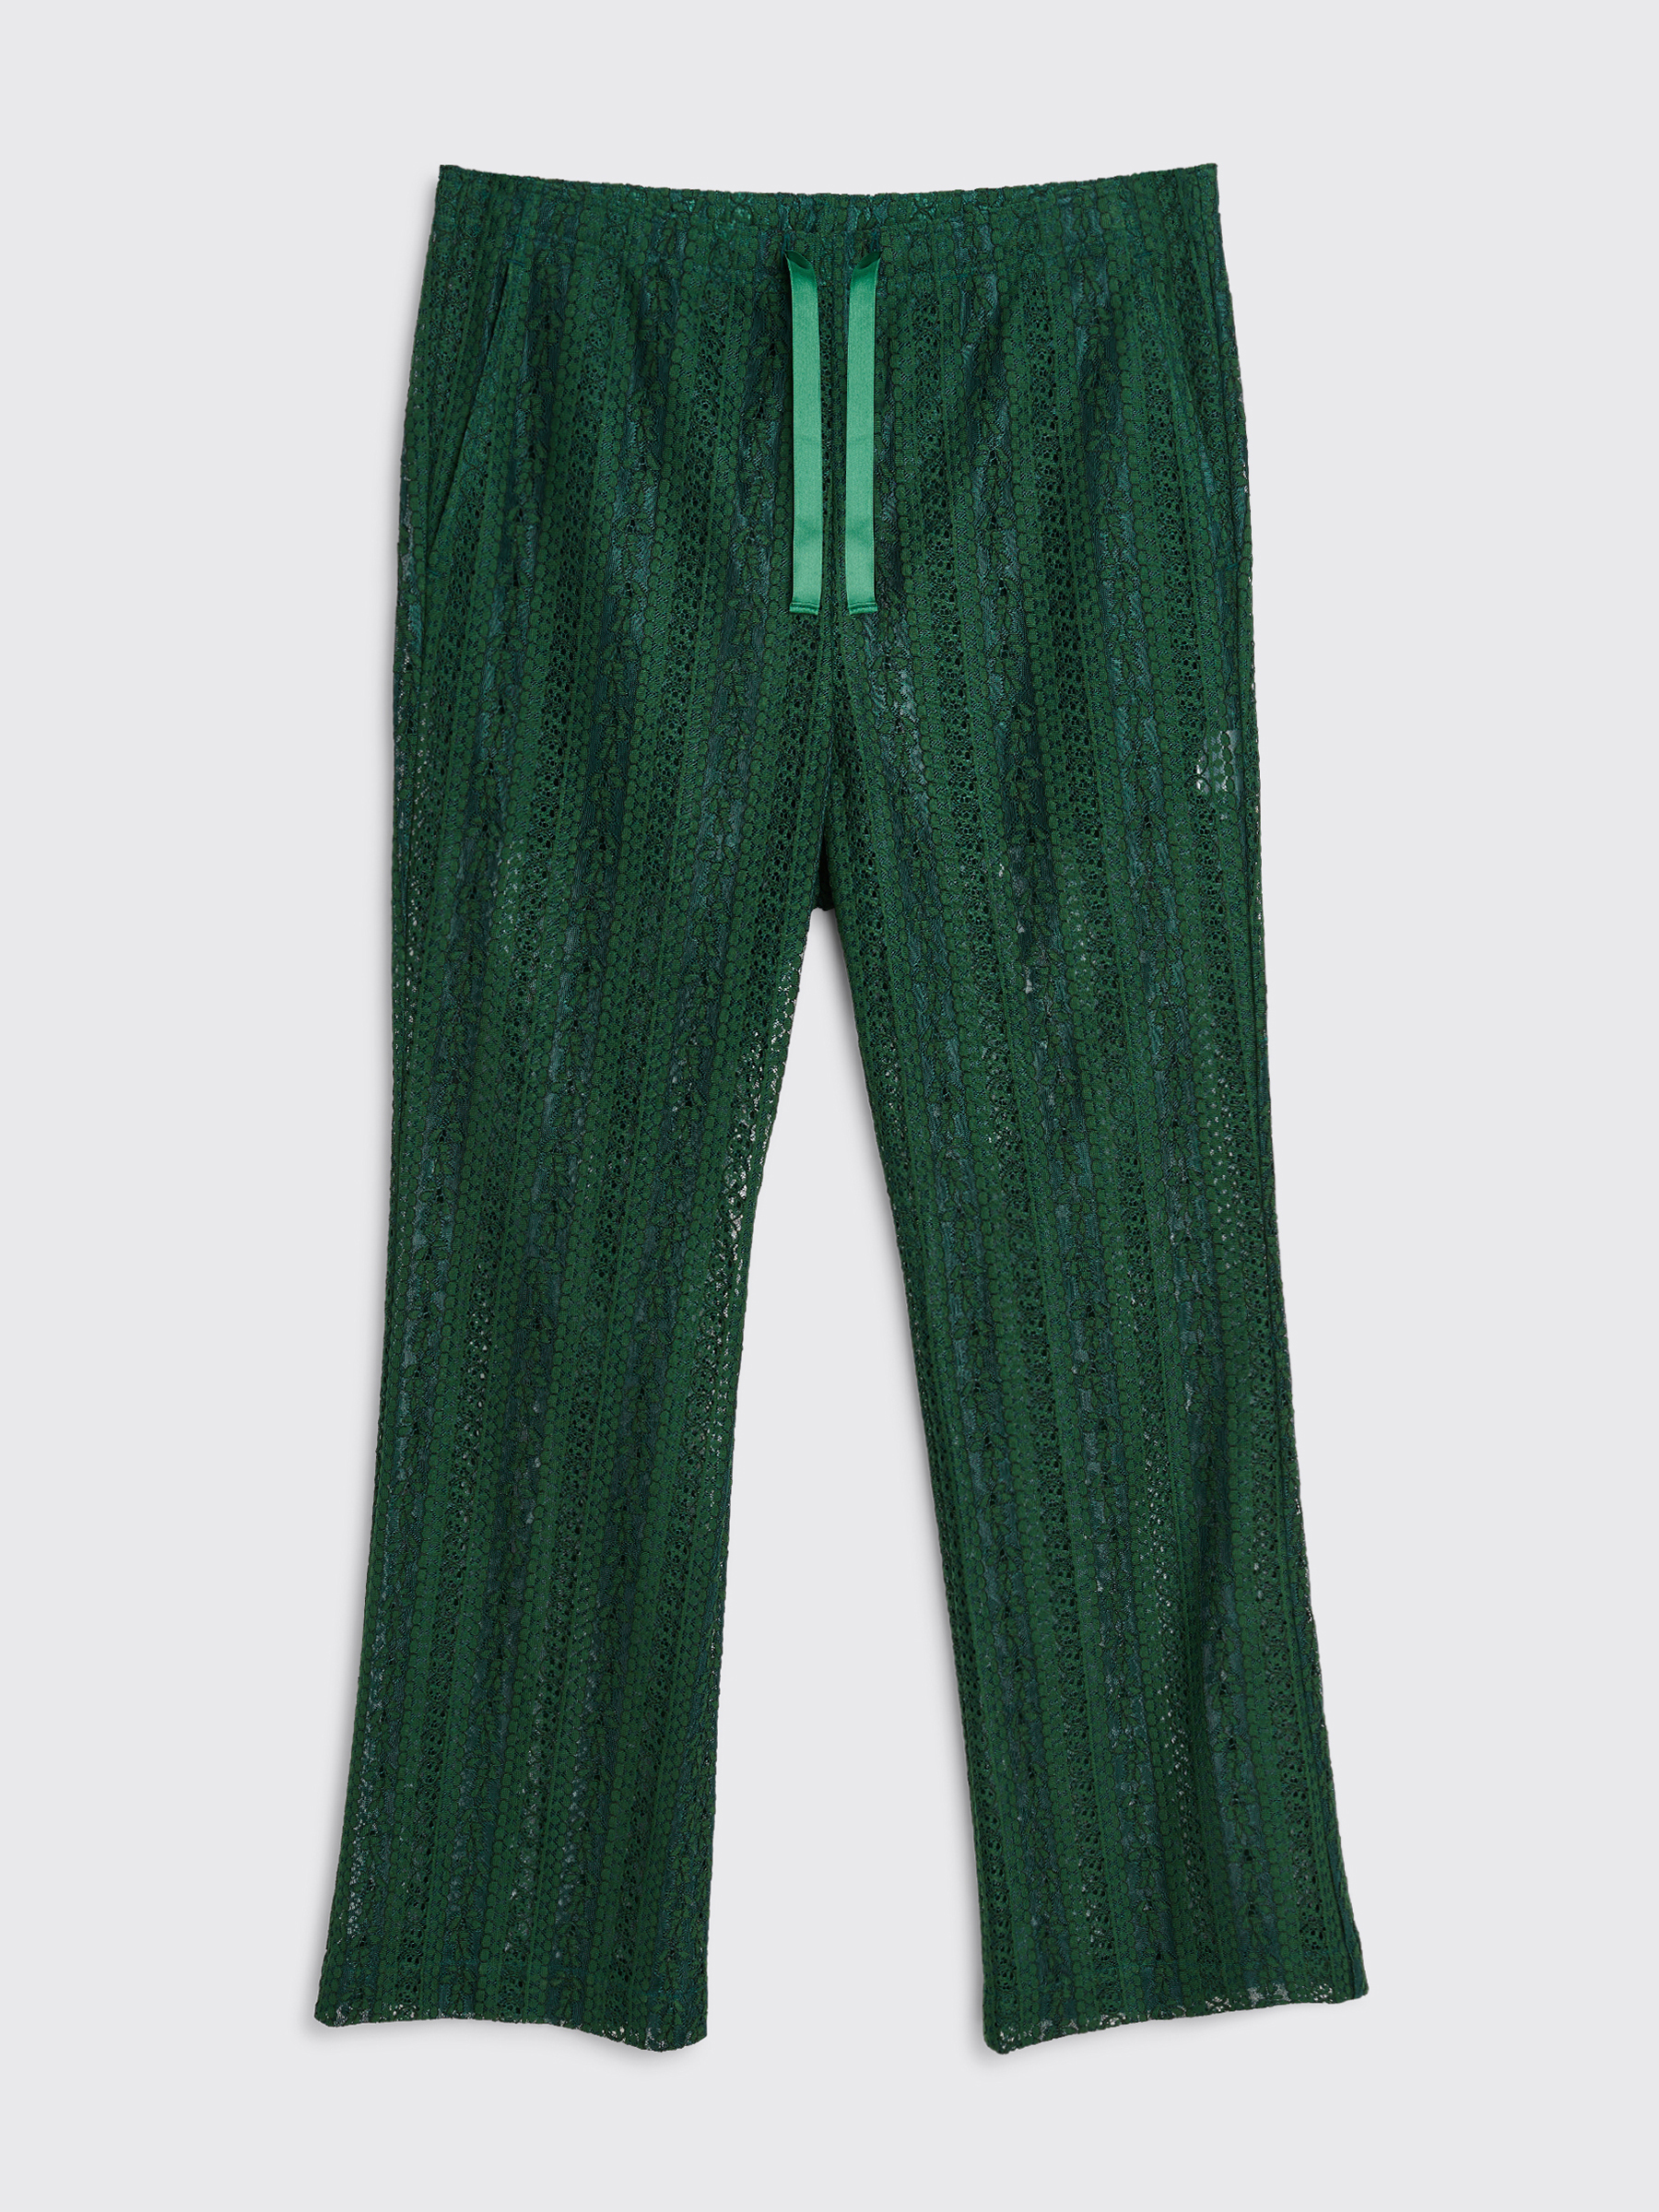 Très Bien - Needles String Boot Cut Pant Stripe Lace Green